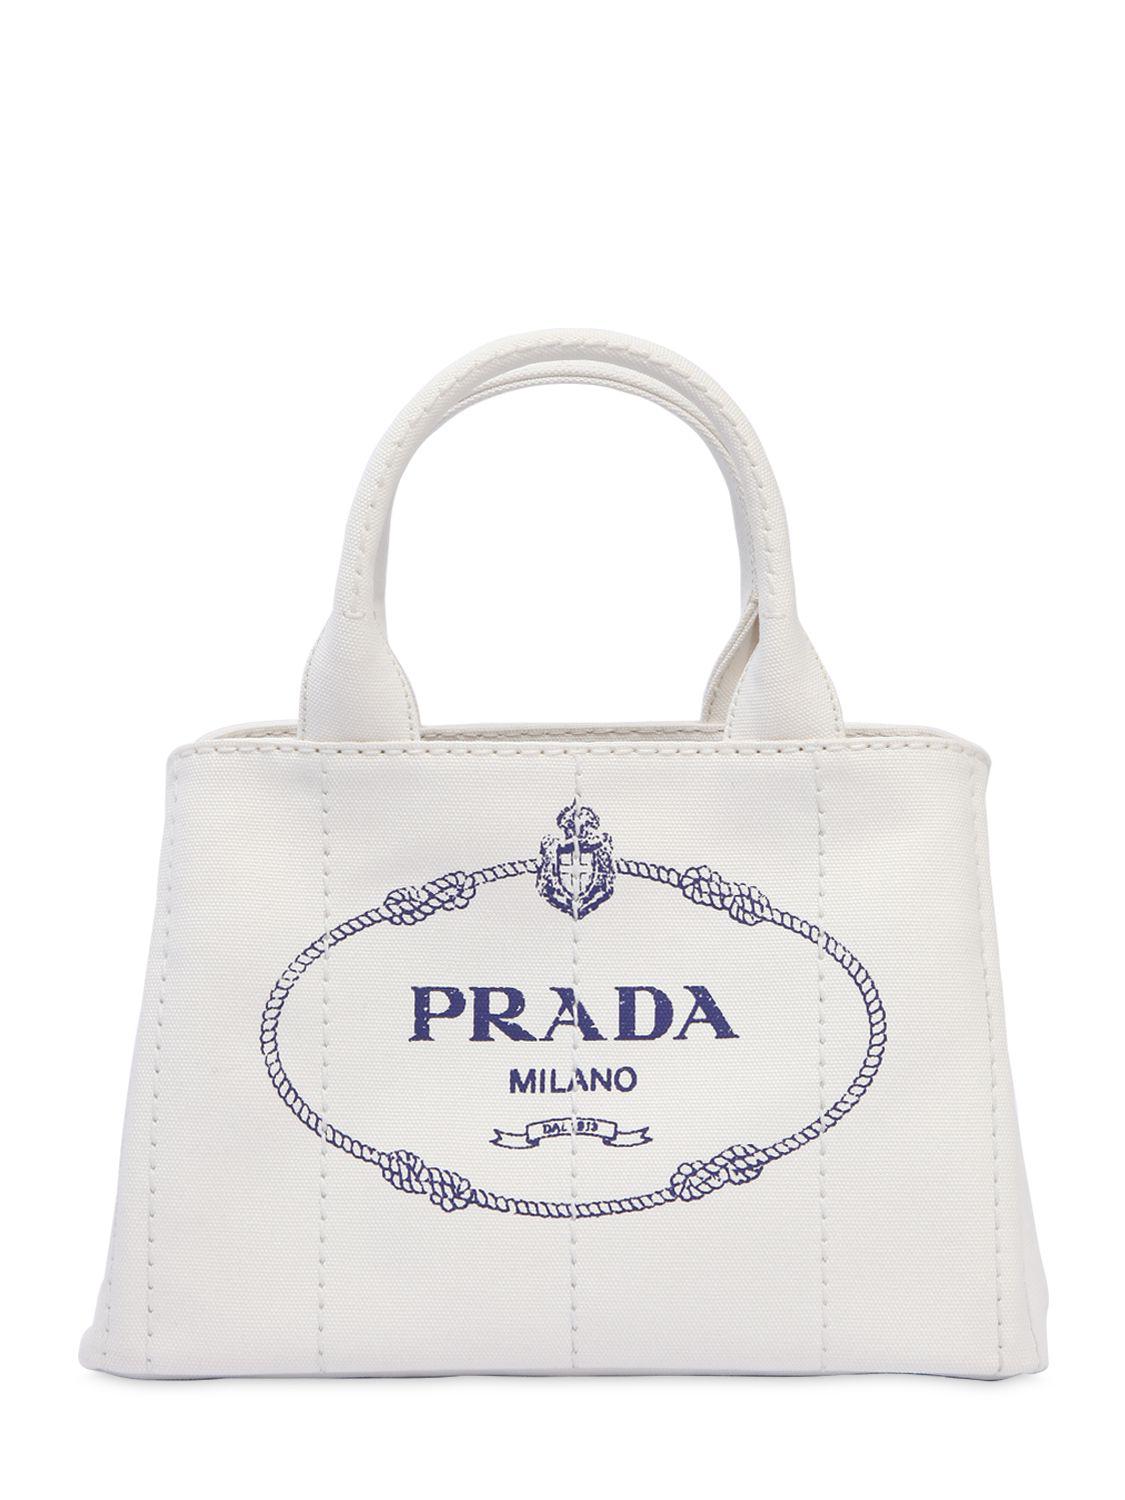 Prada Small Gardener's Cotton Canvas Bag in White - Lyst